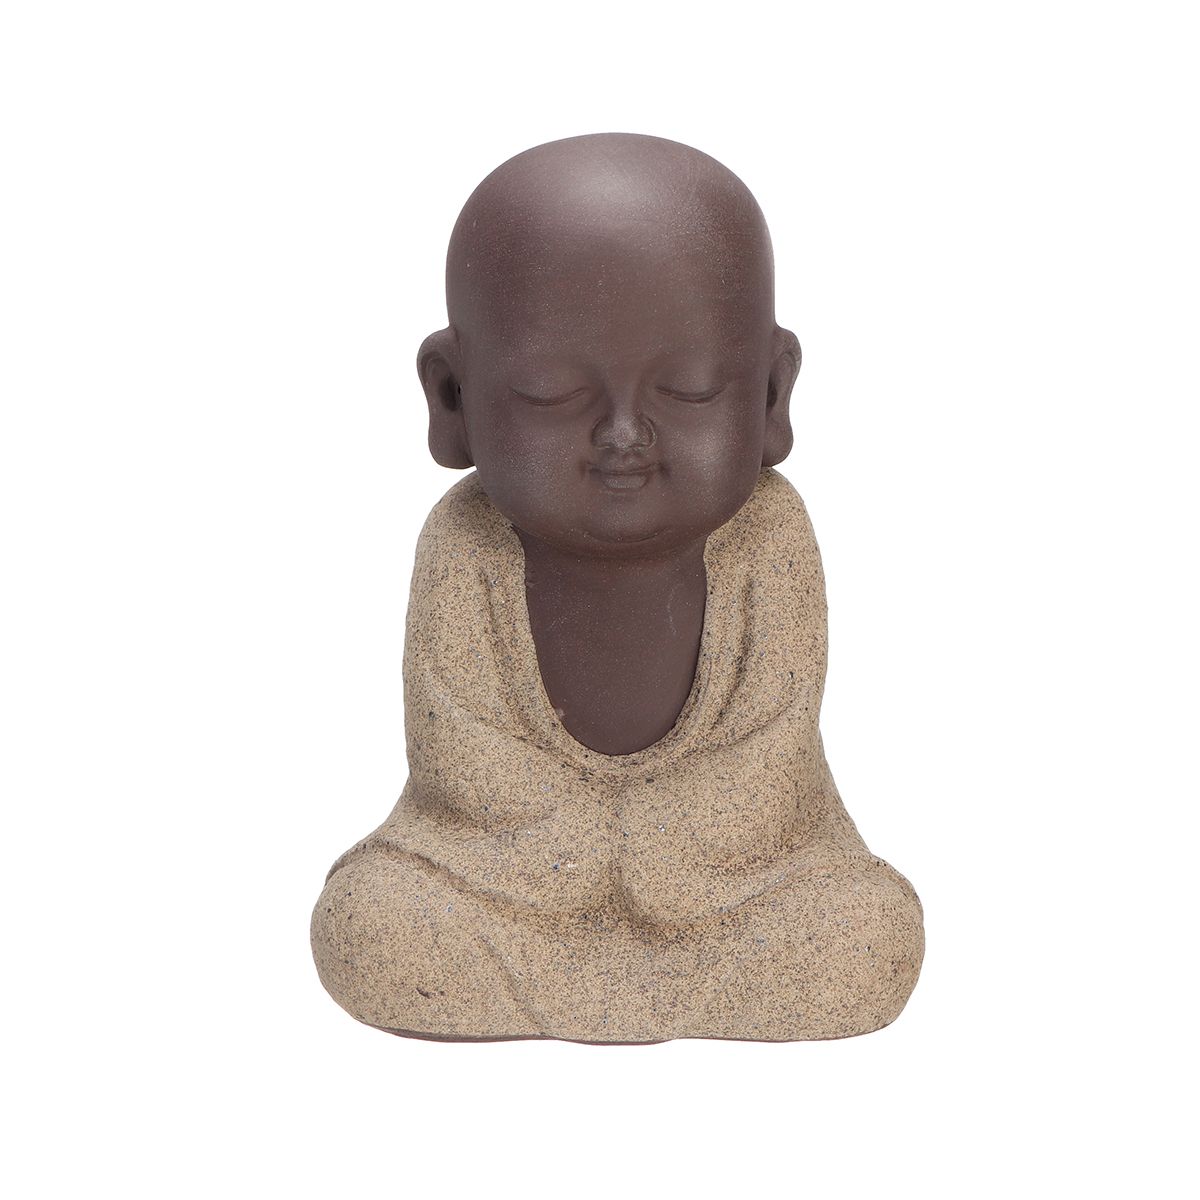 Cute-Little-Monk-Figurine-Statues-Tea-Pet-Home-Tea-Tray-Decorations-Ornament-Ceramic-Collectible-Hom-1550349